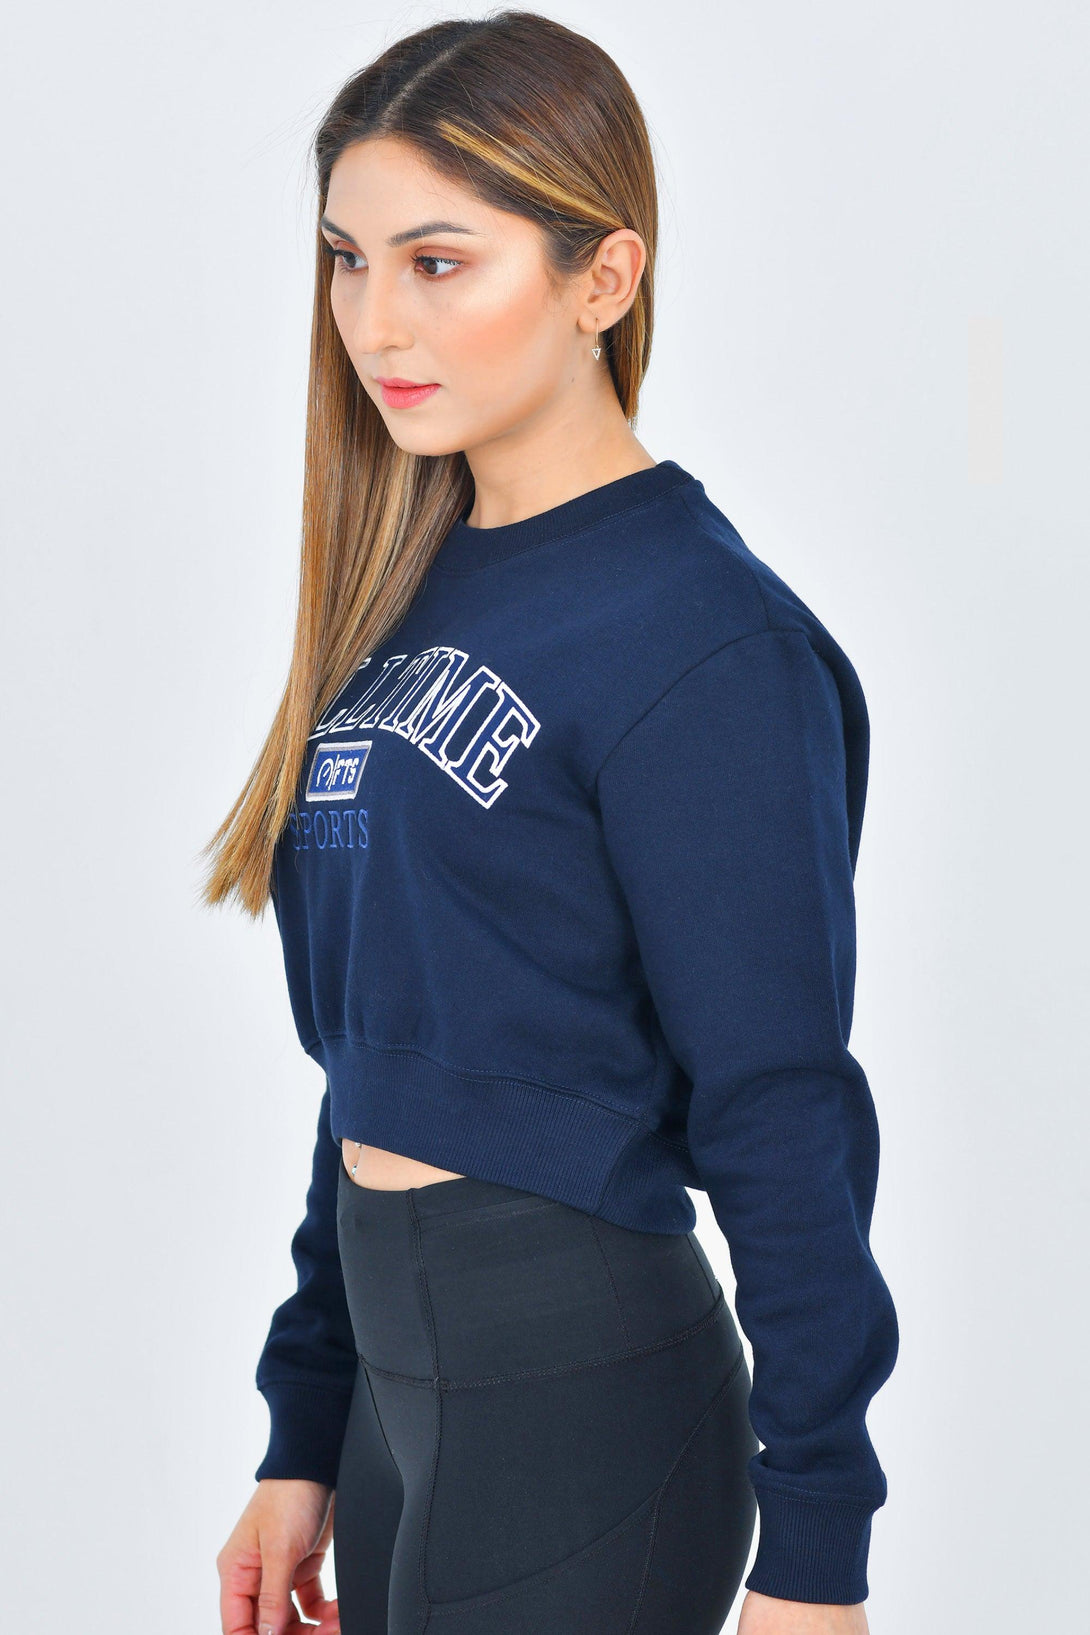 Damen Crop Sweatshirt | NAVY BLAU - Full Time Sports Germany 